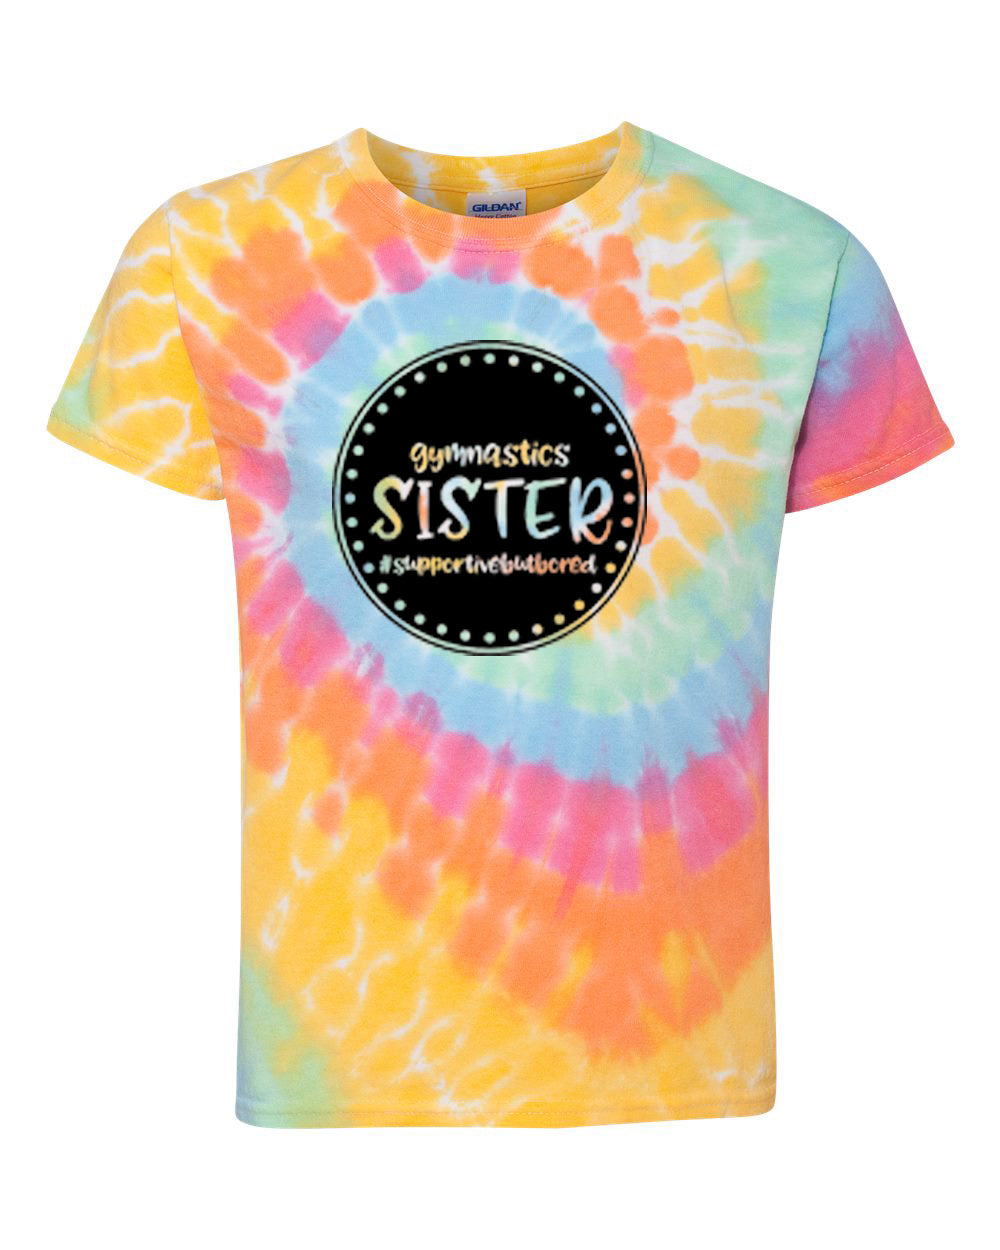 Gymnastics Sister Youth Tie Dye T-Shirt